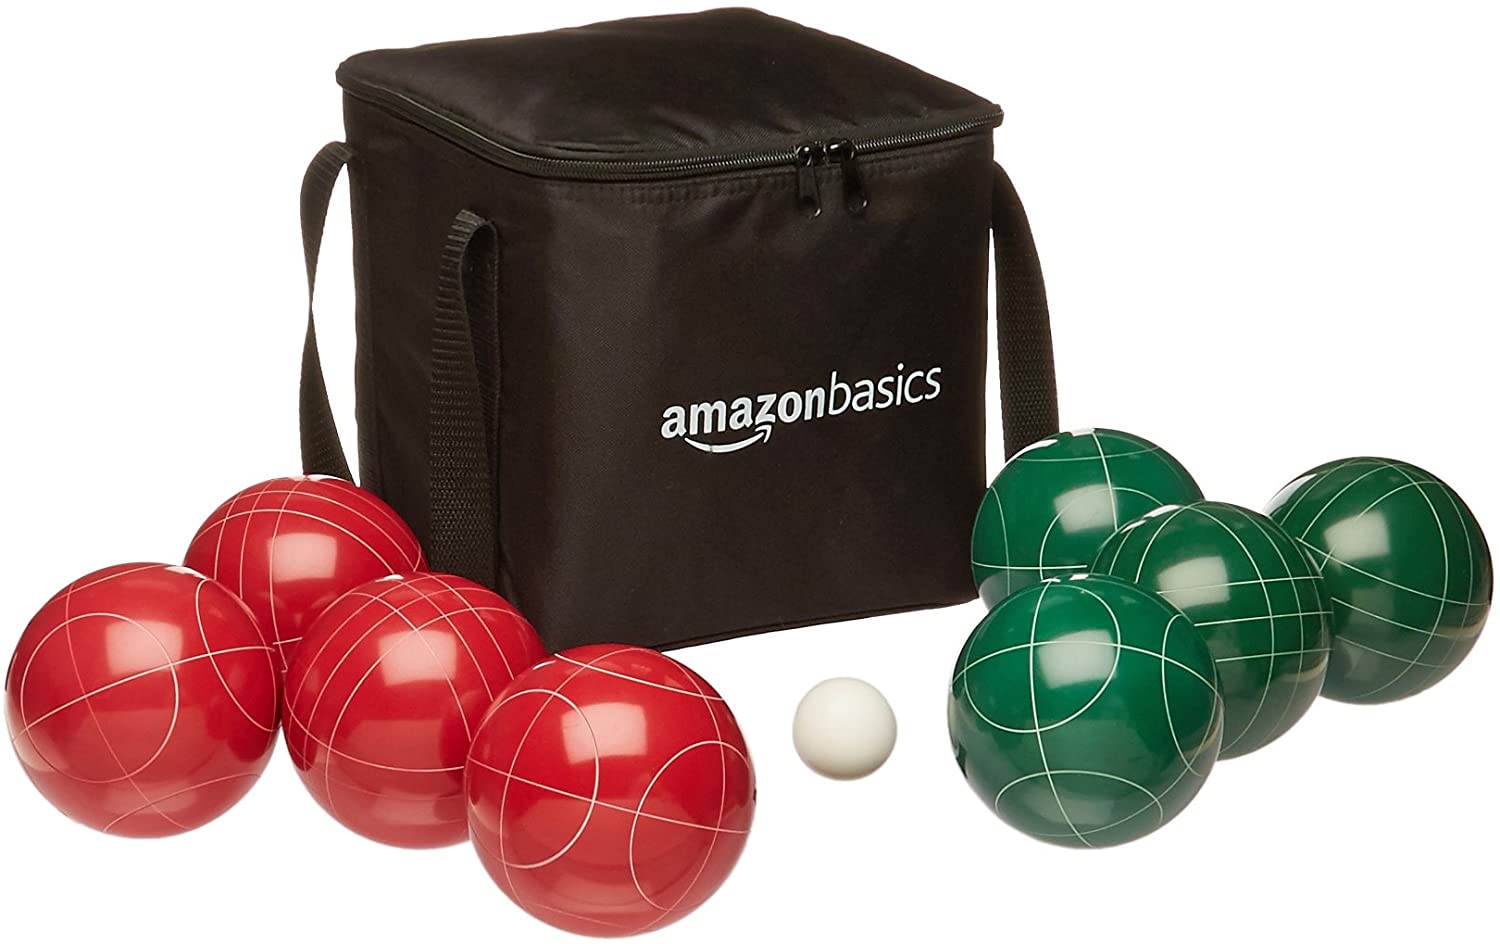 Bocce ball set with Amazon basics carry case